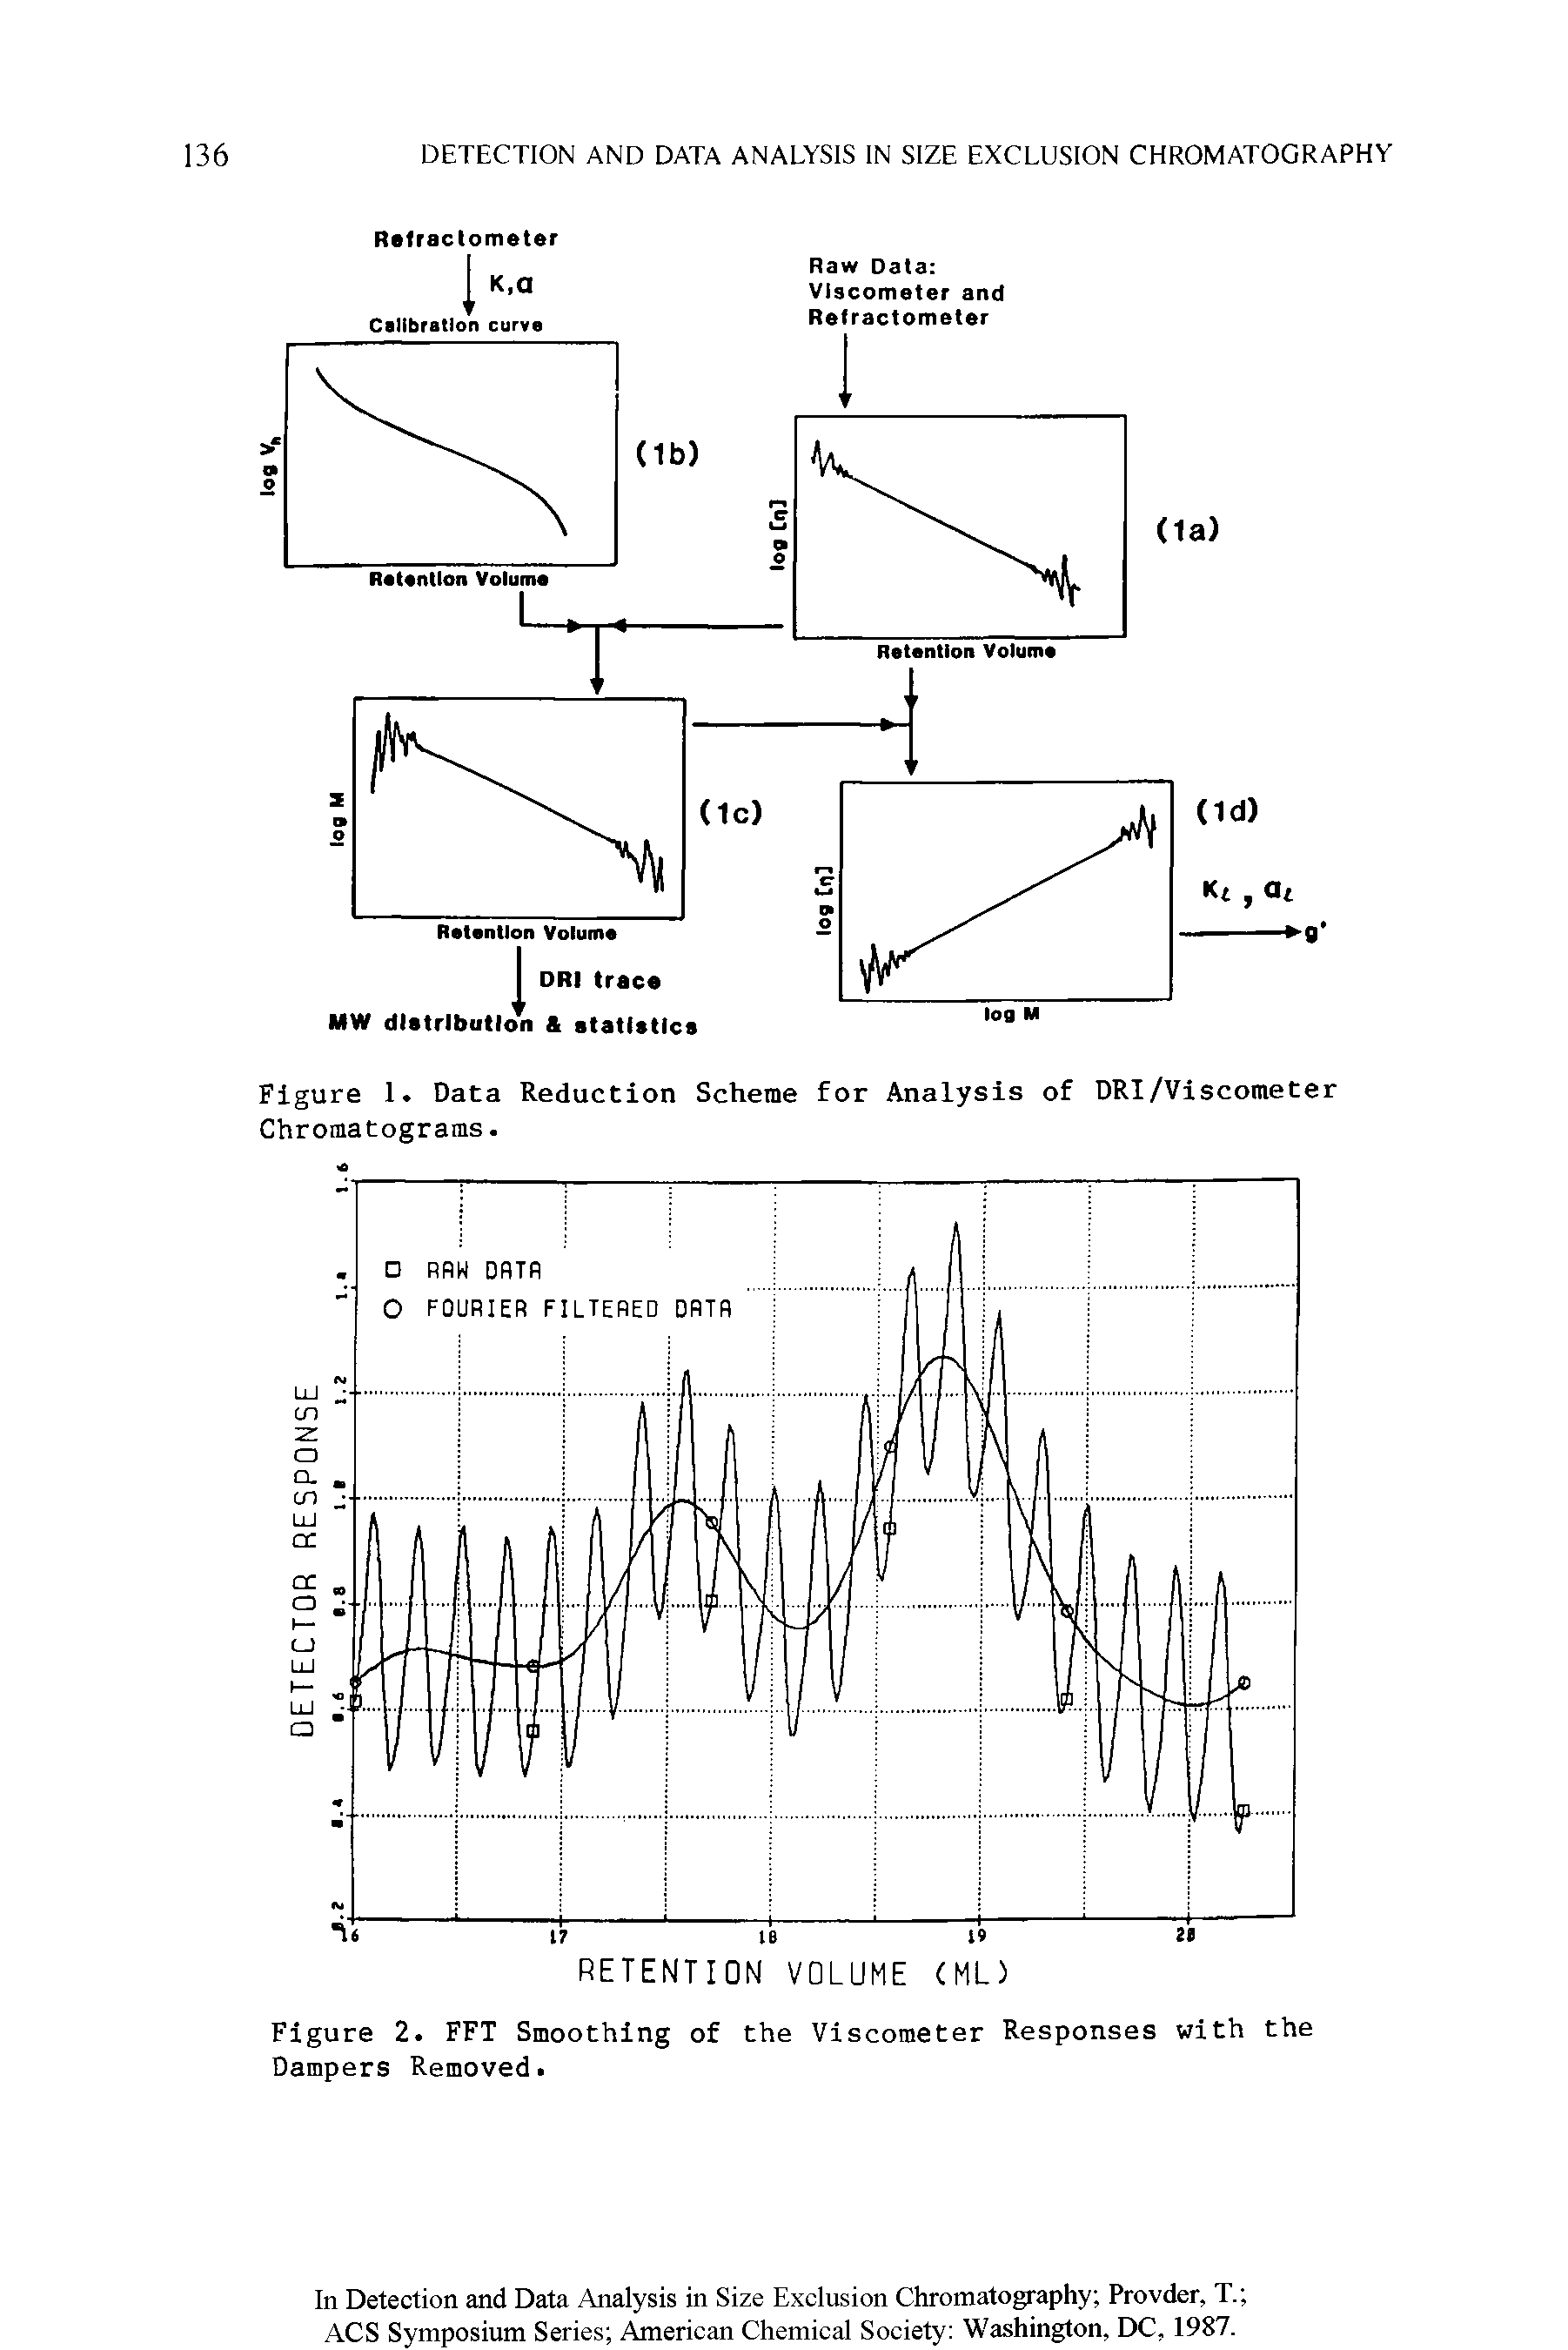 Figure 1. Data Reduction Scheme for Analysis of DRI/Viscometer Chromatograms.